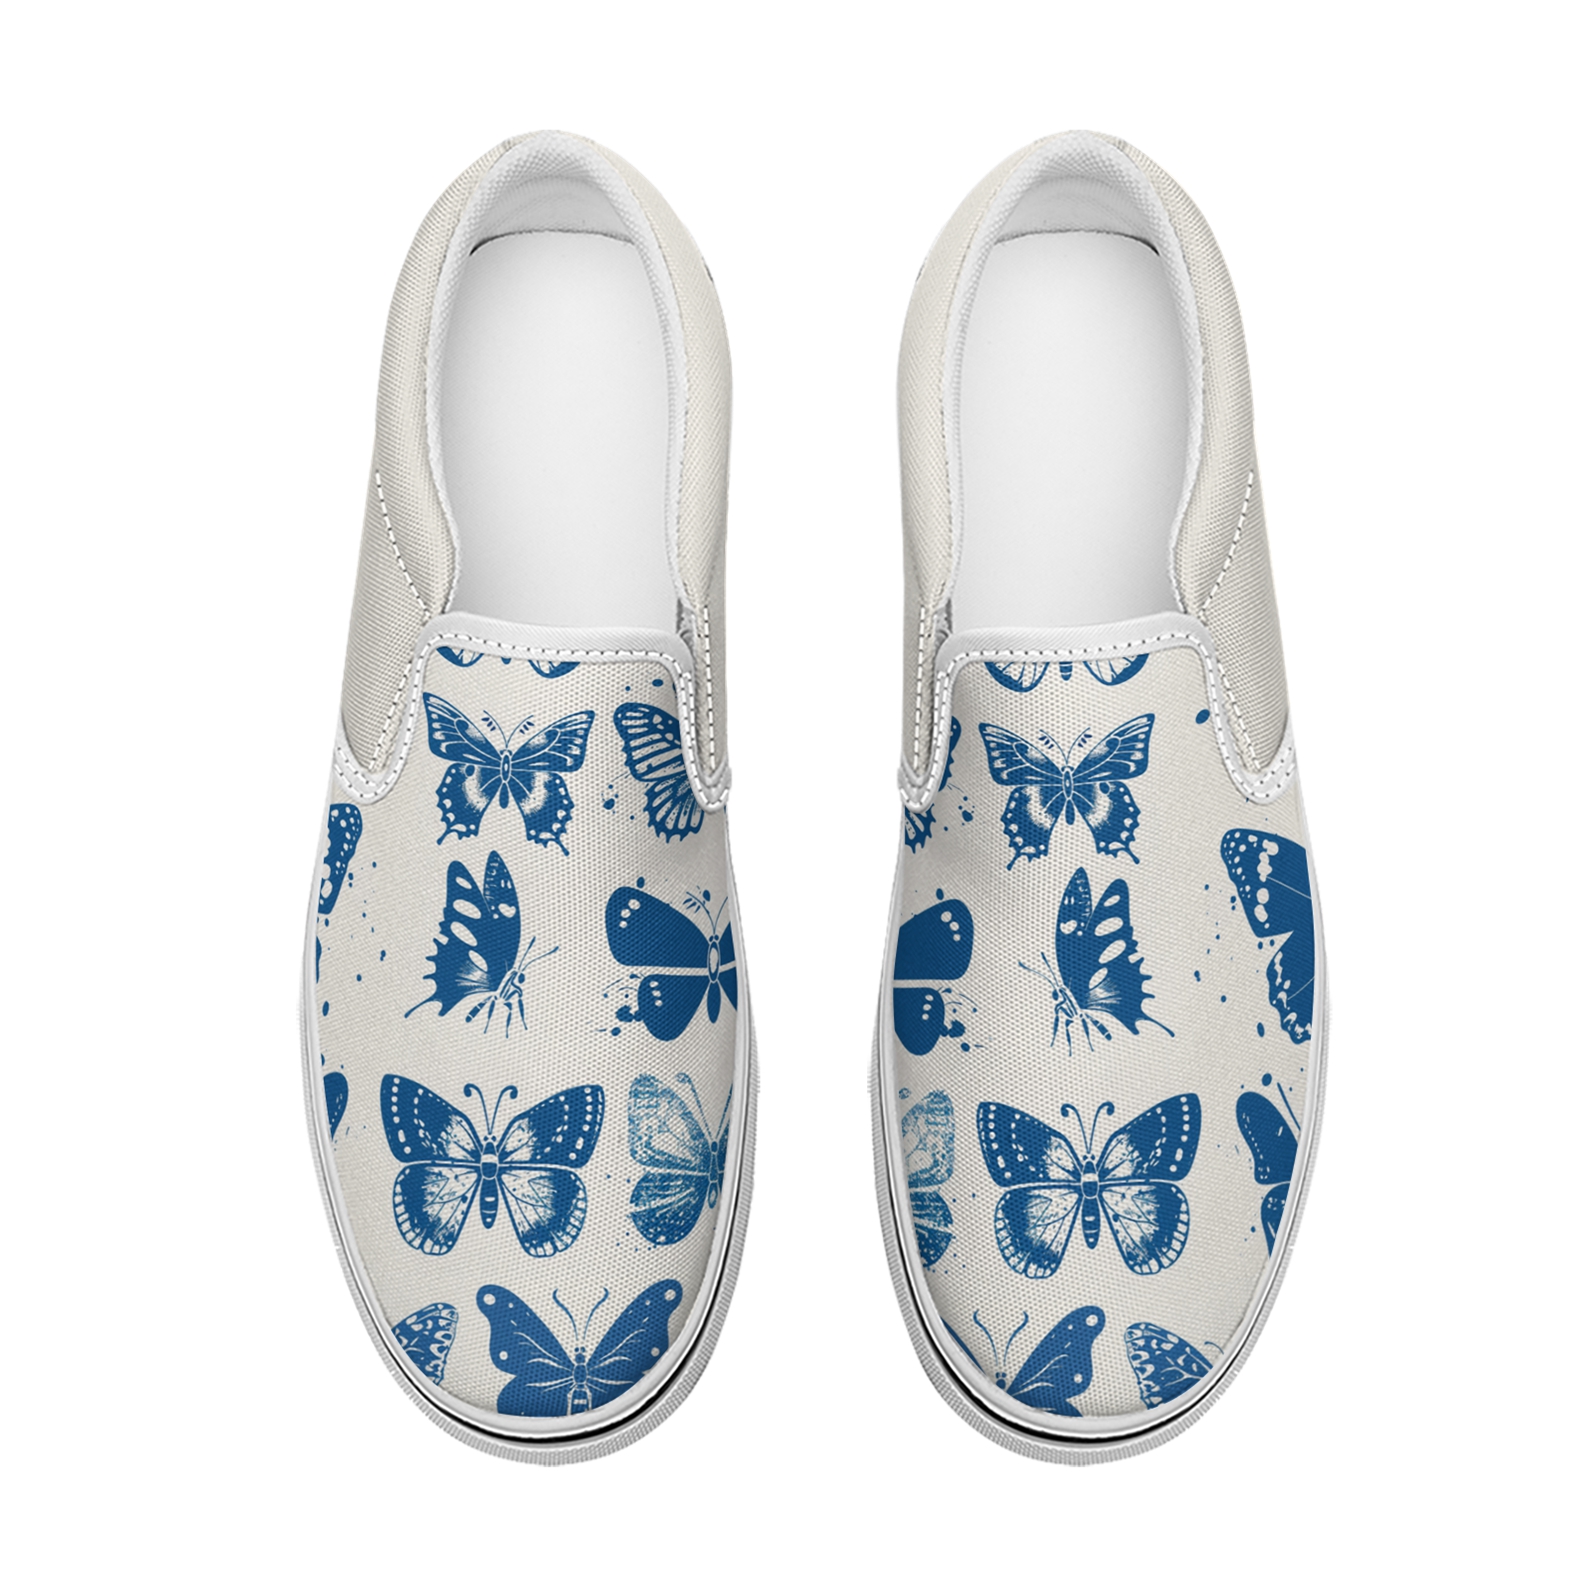 Women's Fashion Butterfly Pattern Slip On Canvas Sneaker Low Top Casual Walking Shoes Classic Comfort Flat Fashion Sneakers